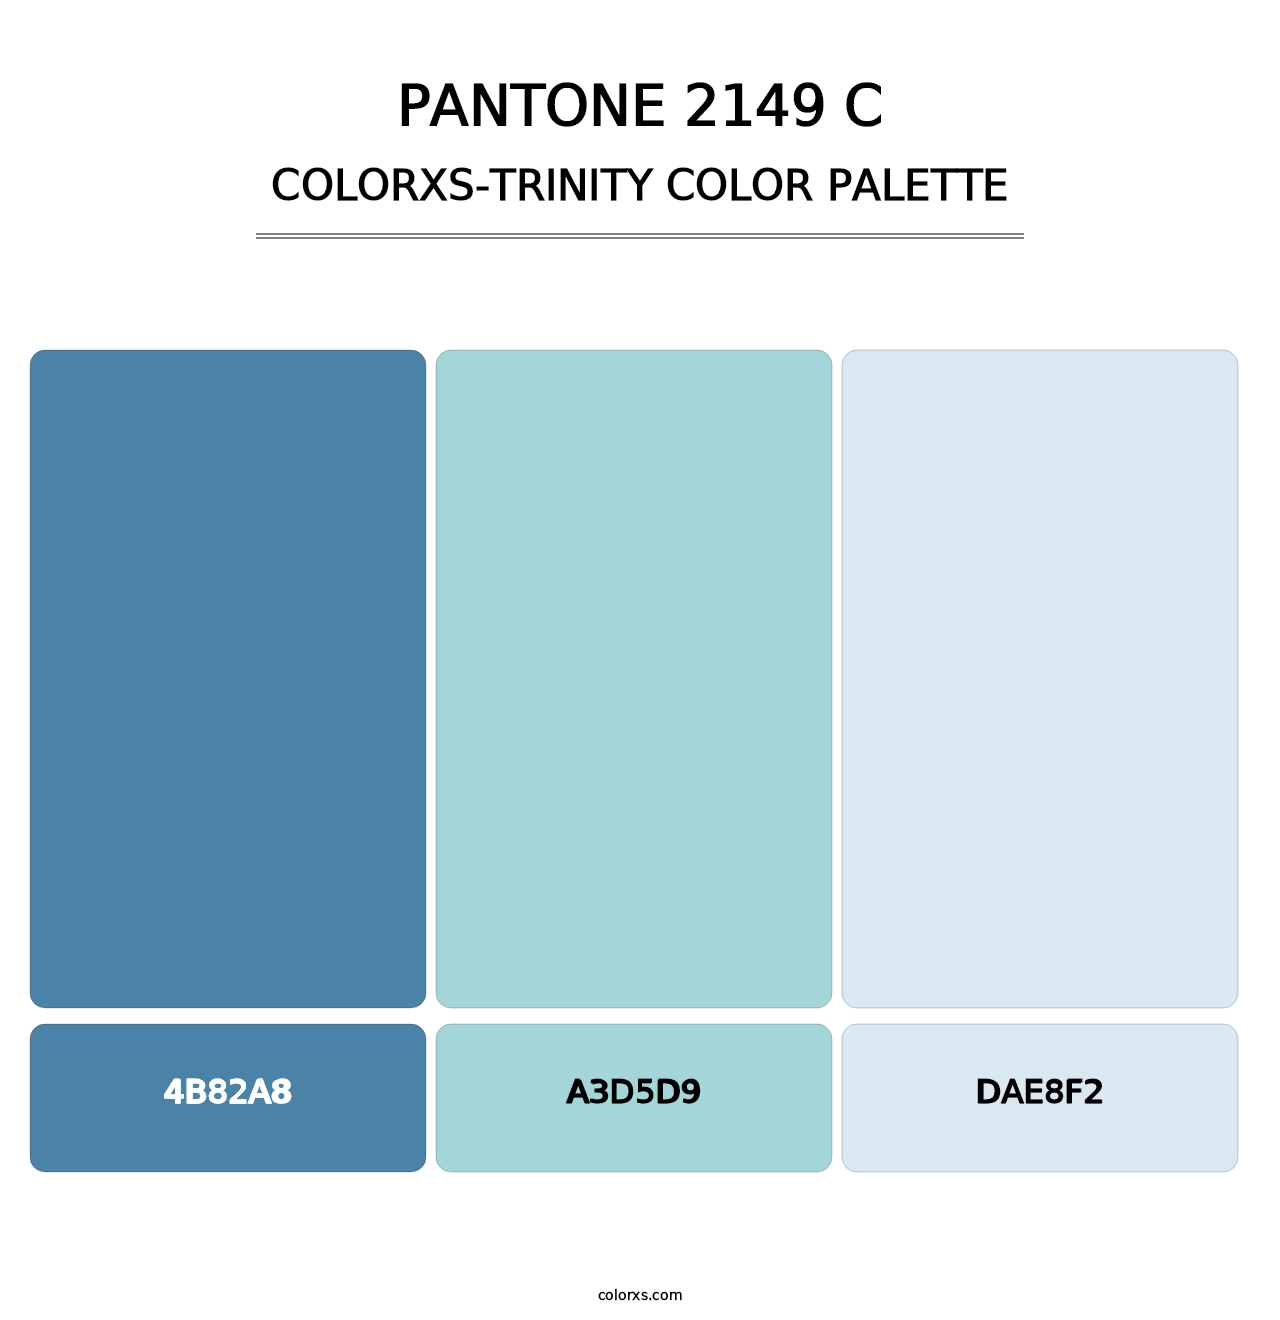 PANTONE 2149 C - Colorxs Trinity Palette